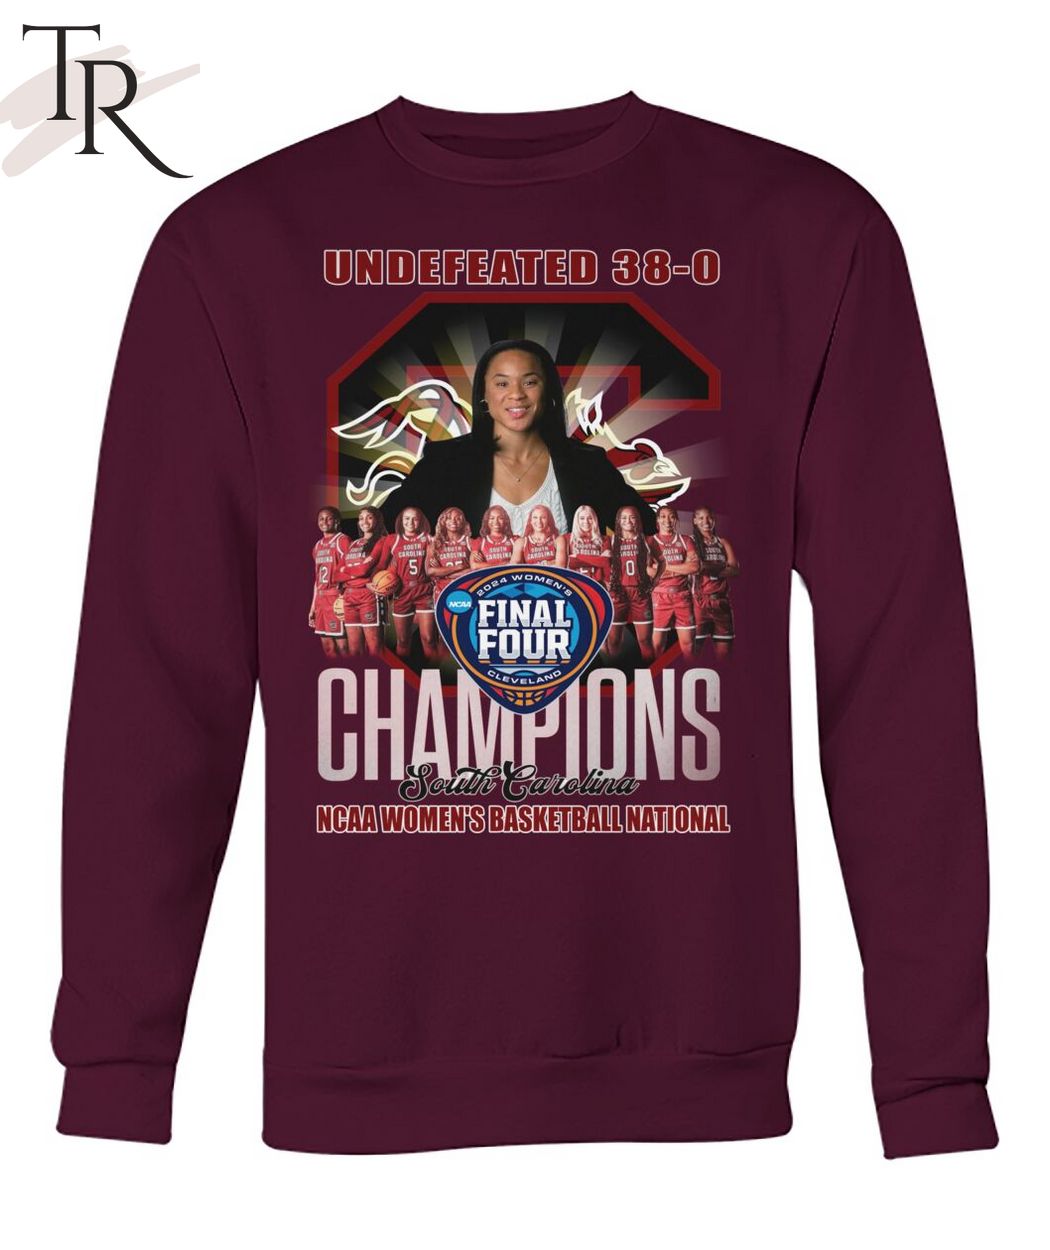 Undefeated 38-0 Champions South Carolina NCAA Women's Basketball National T-Shirt